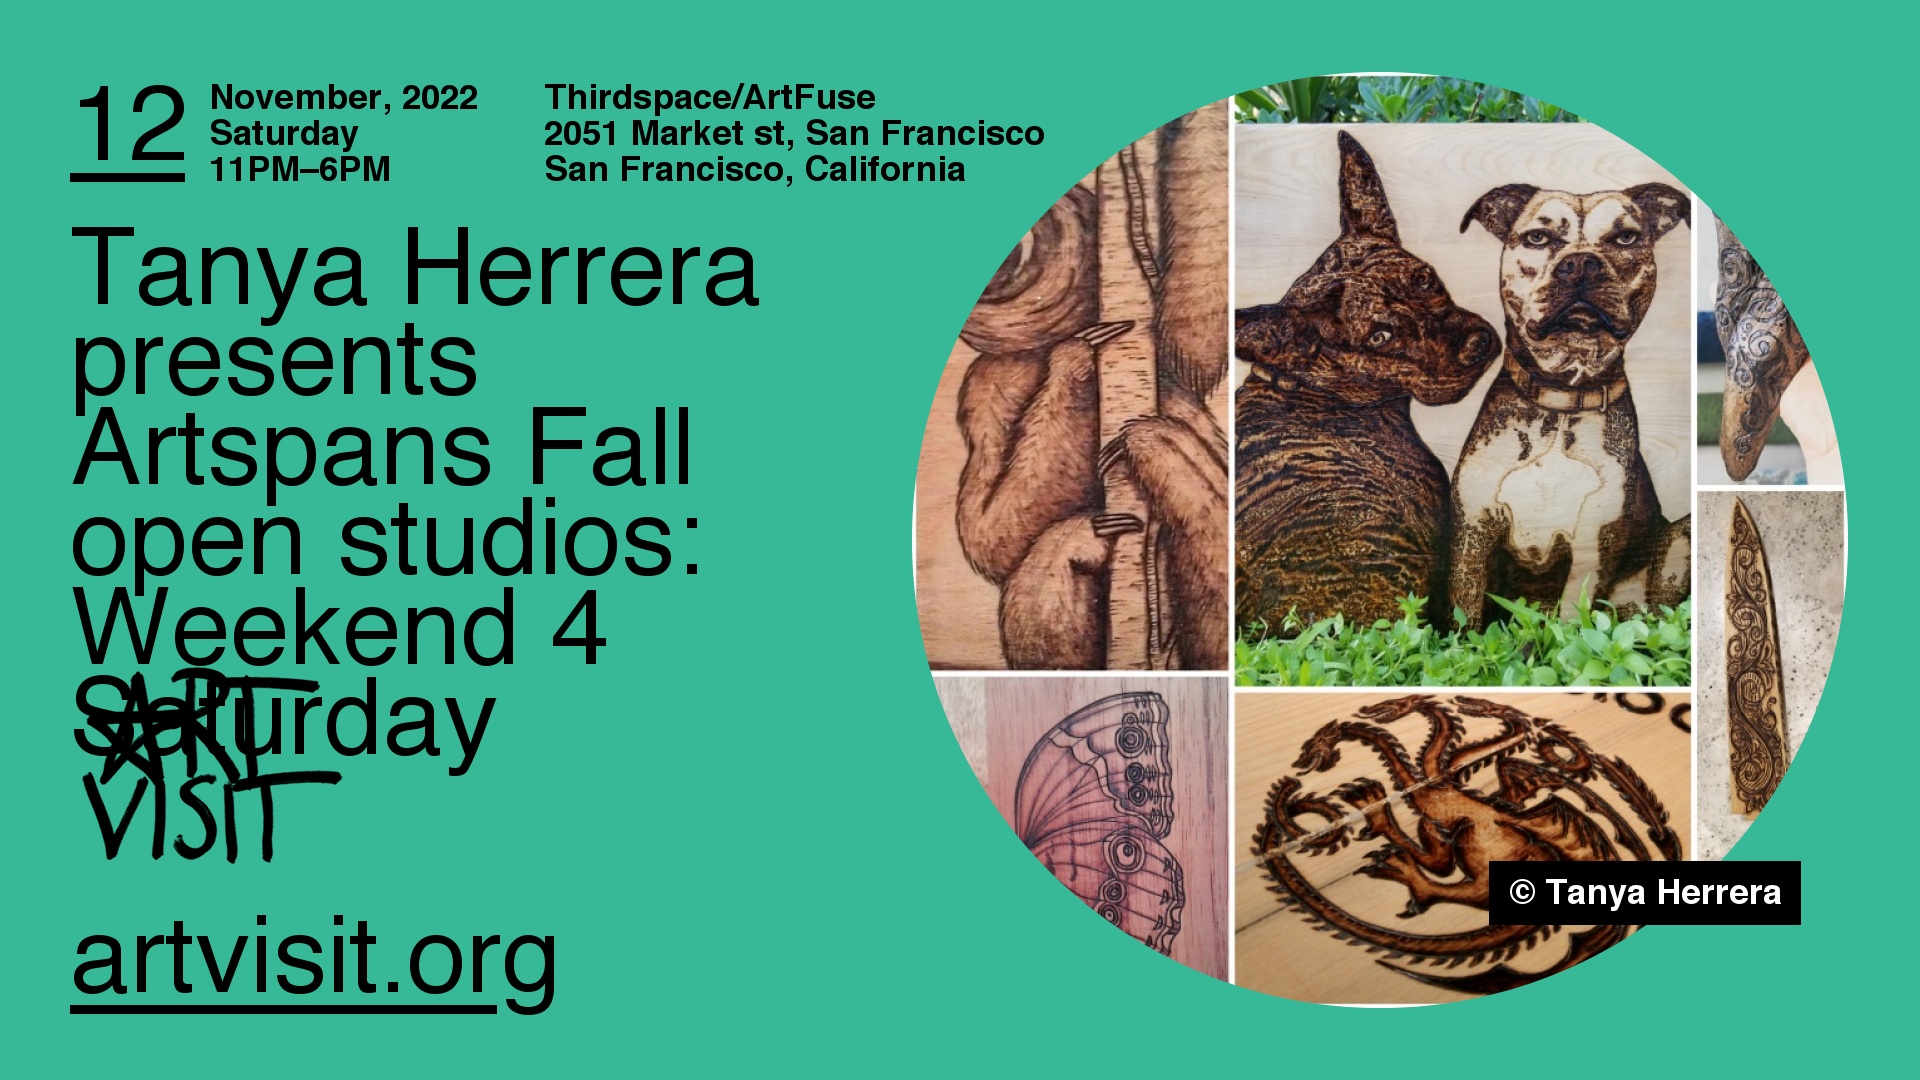 Tanya Herrera presents Artspans Fall open studios: Weekend 4 Saturday 